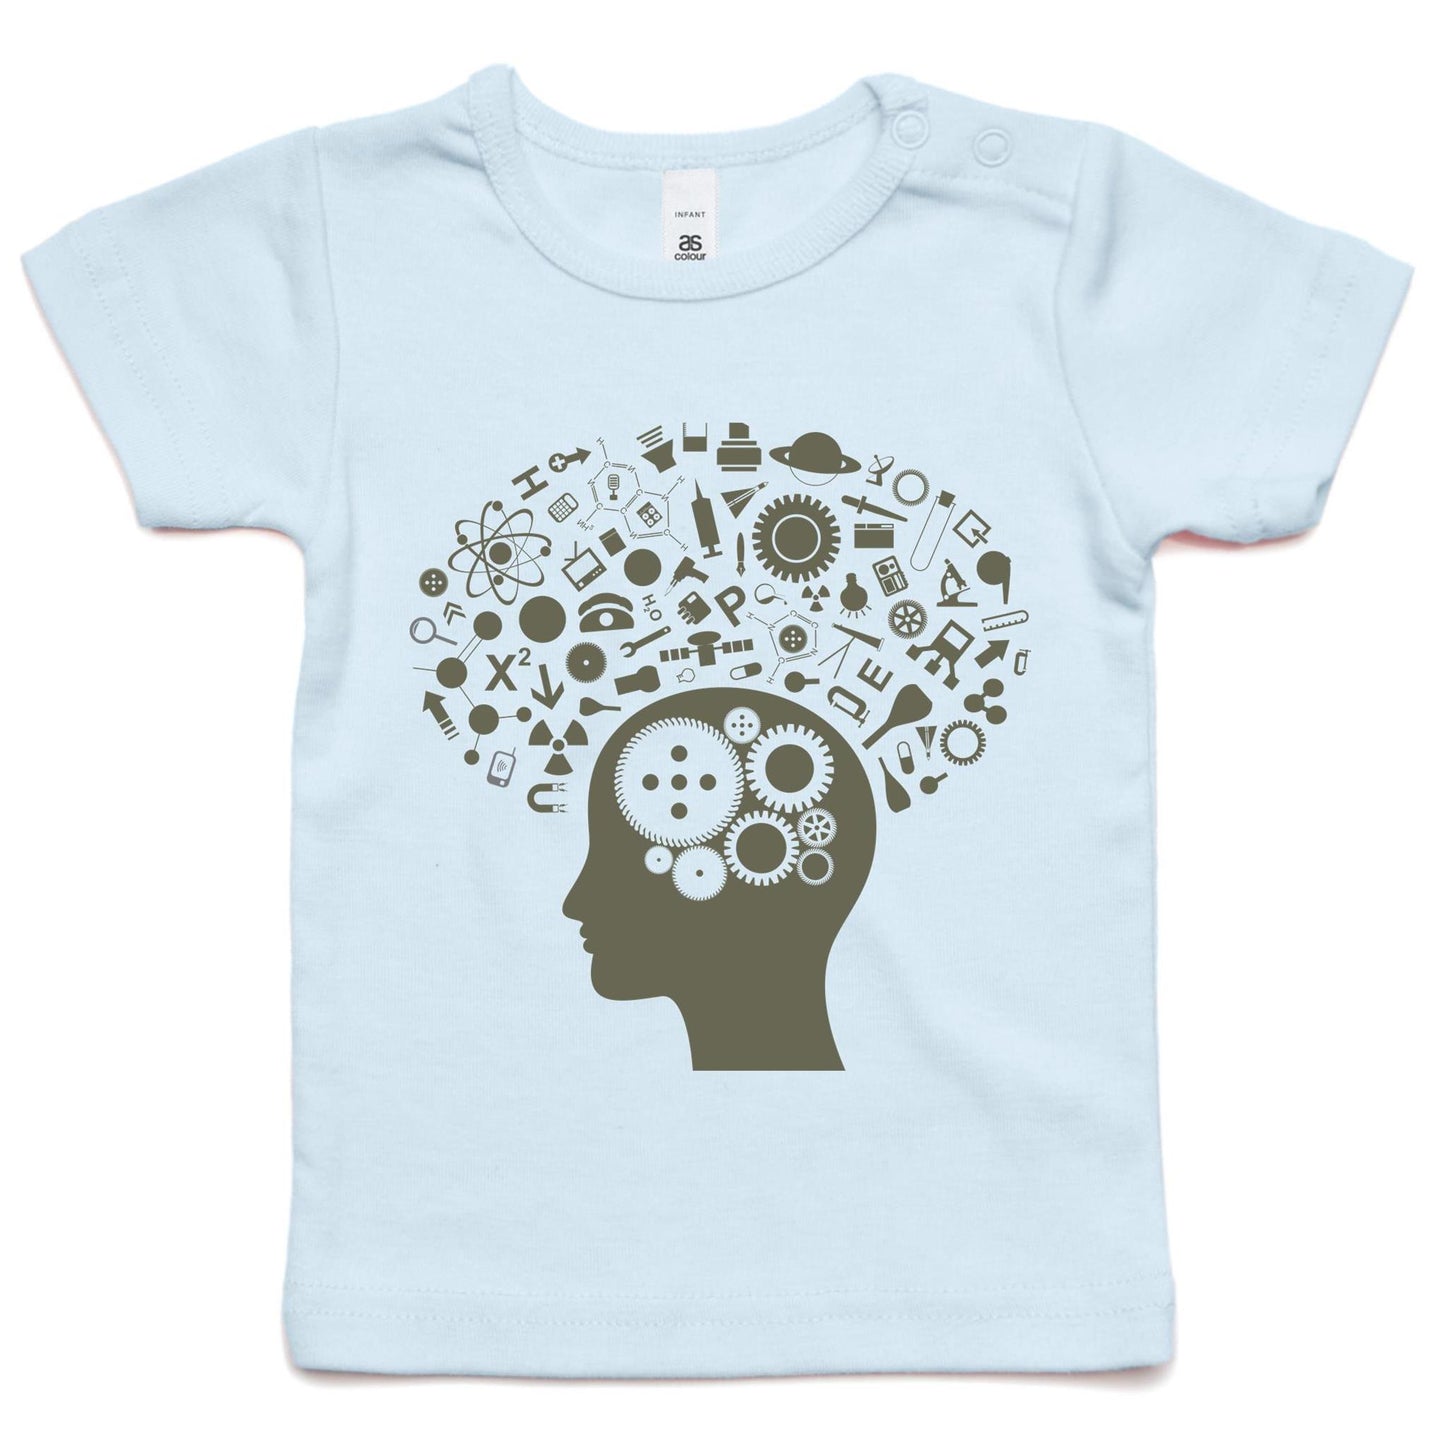 Science Brain - Baby T-shirt Powder Blue Baby T-shirt kids Science